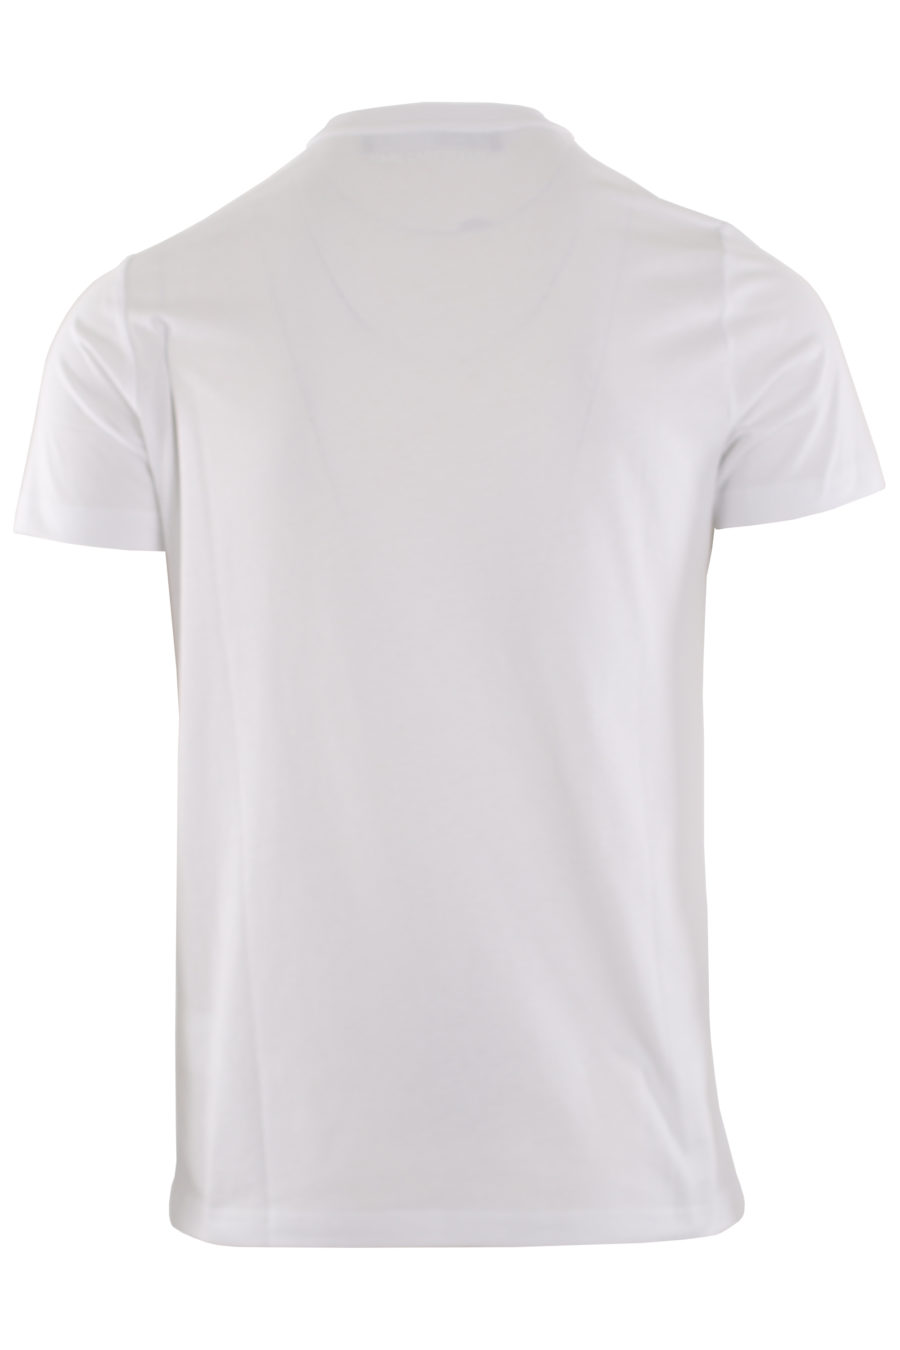 Camiseta blanca con logo grande bordado - IMG 0438